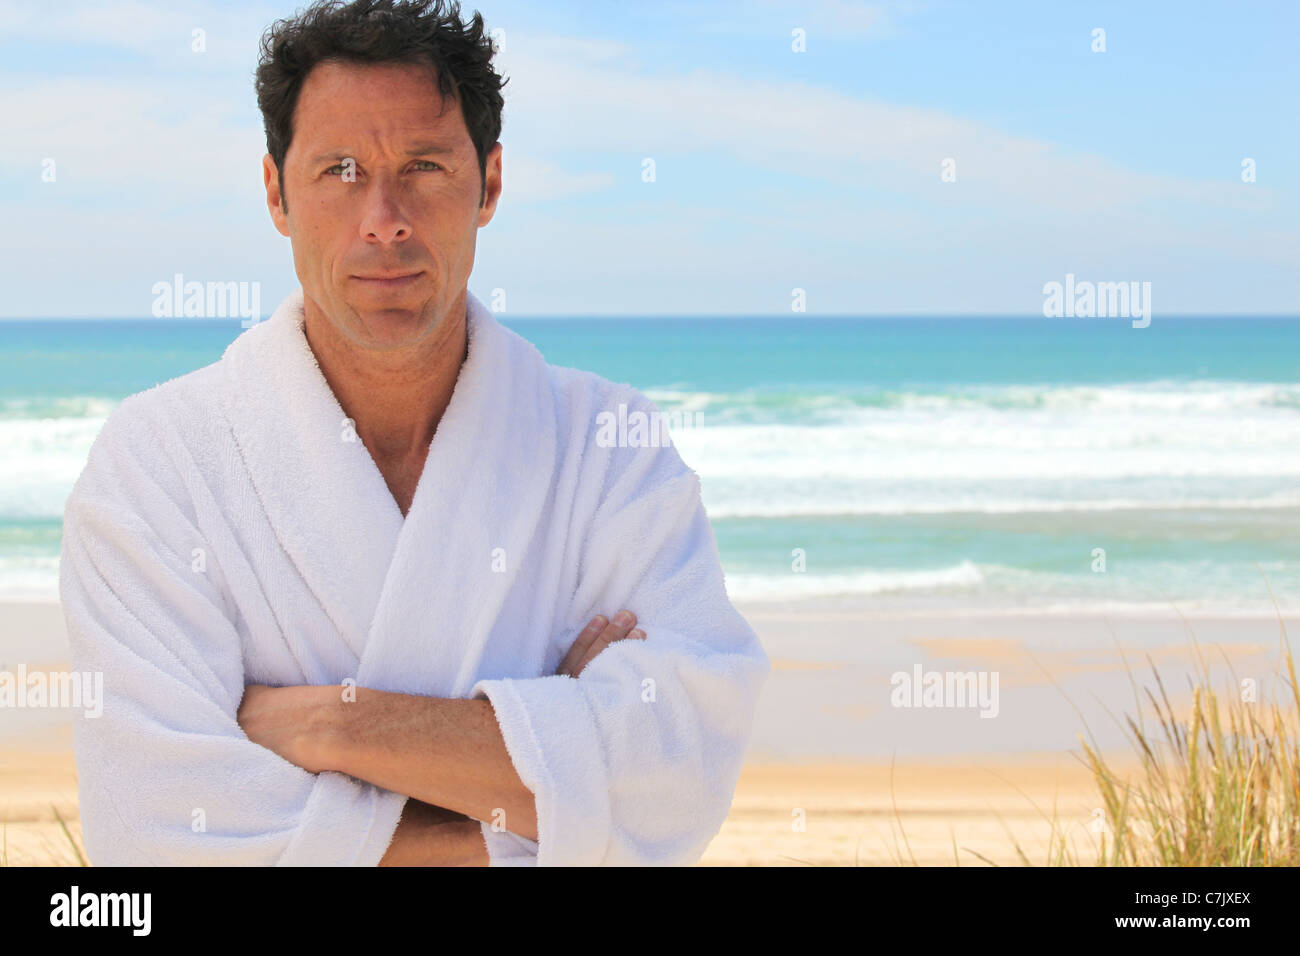 man on the beach Stock Photo